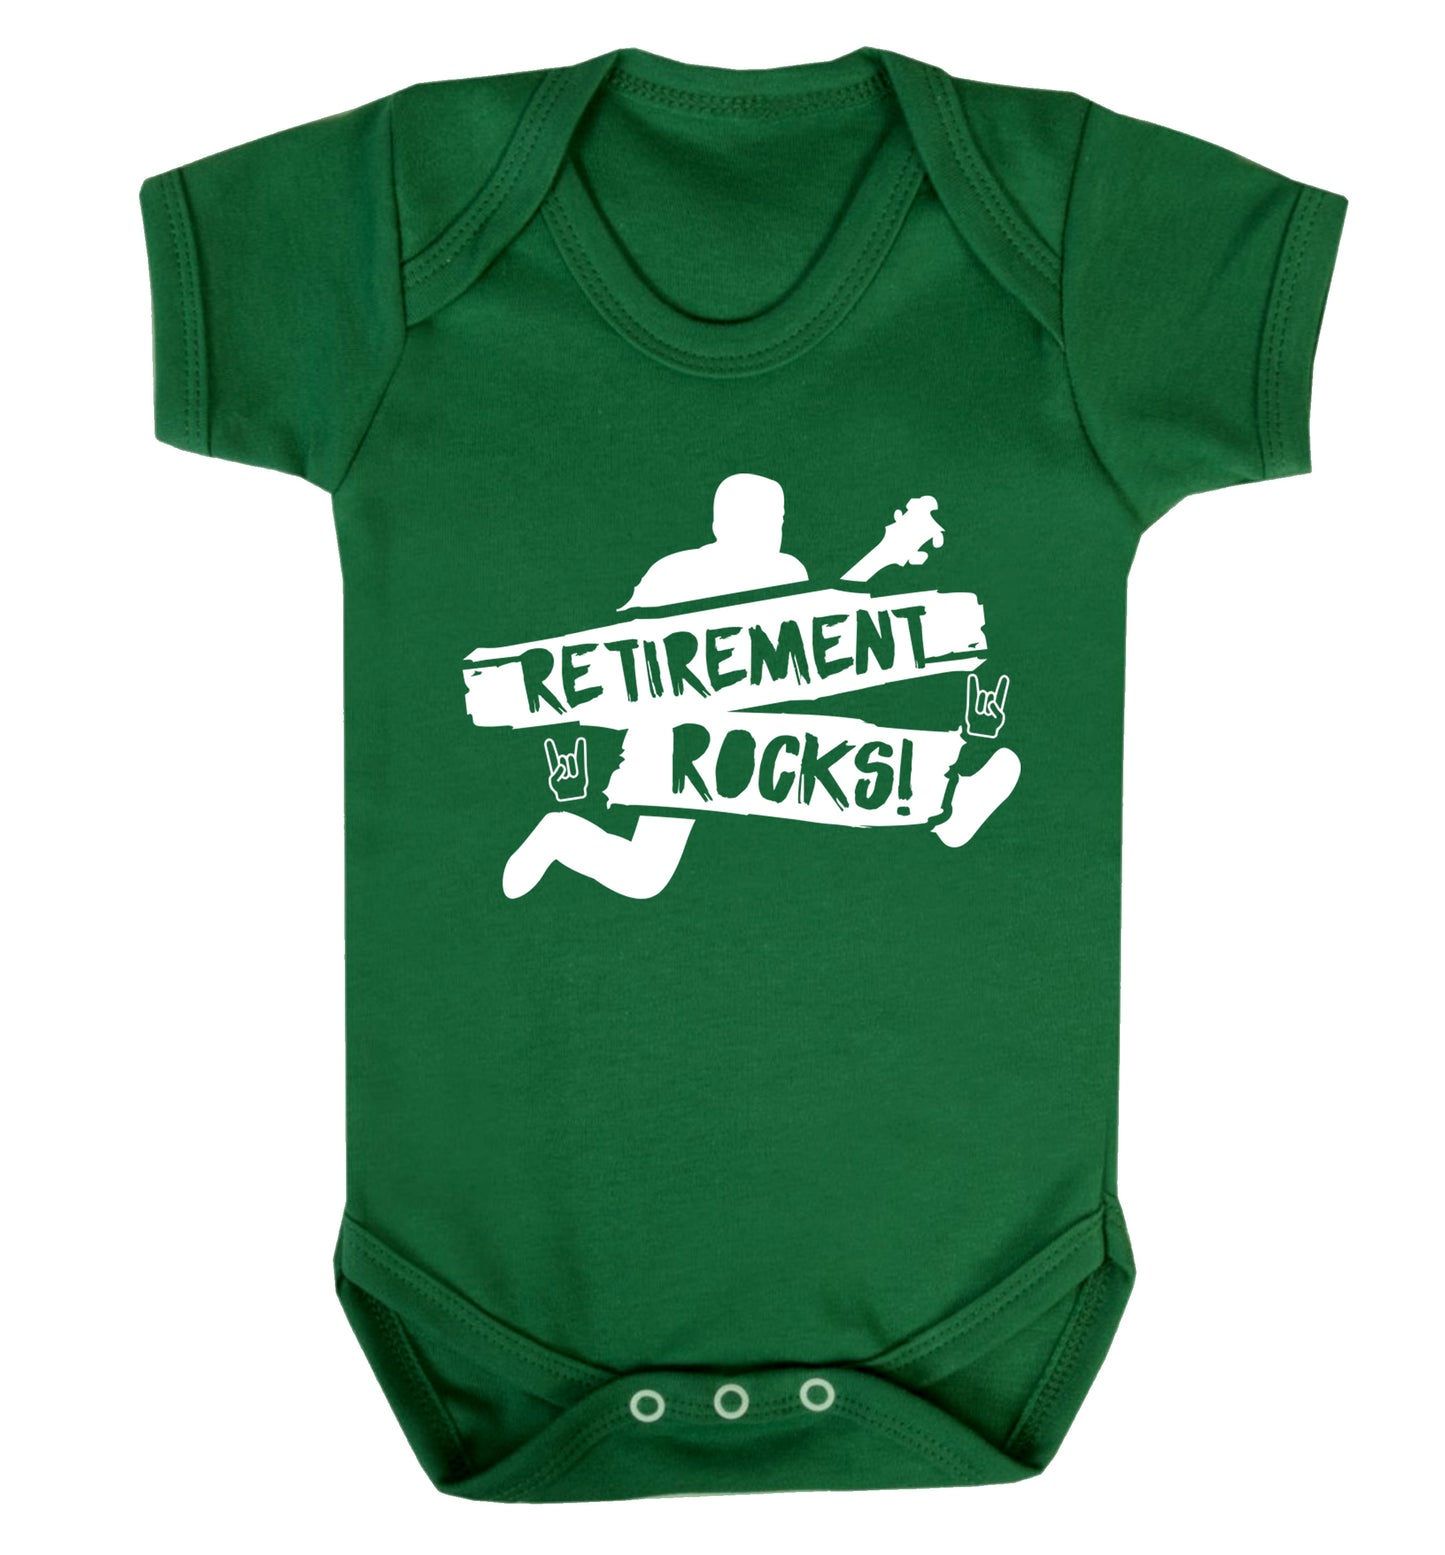 Retirement Rocks Baby Vest green 18-24 months